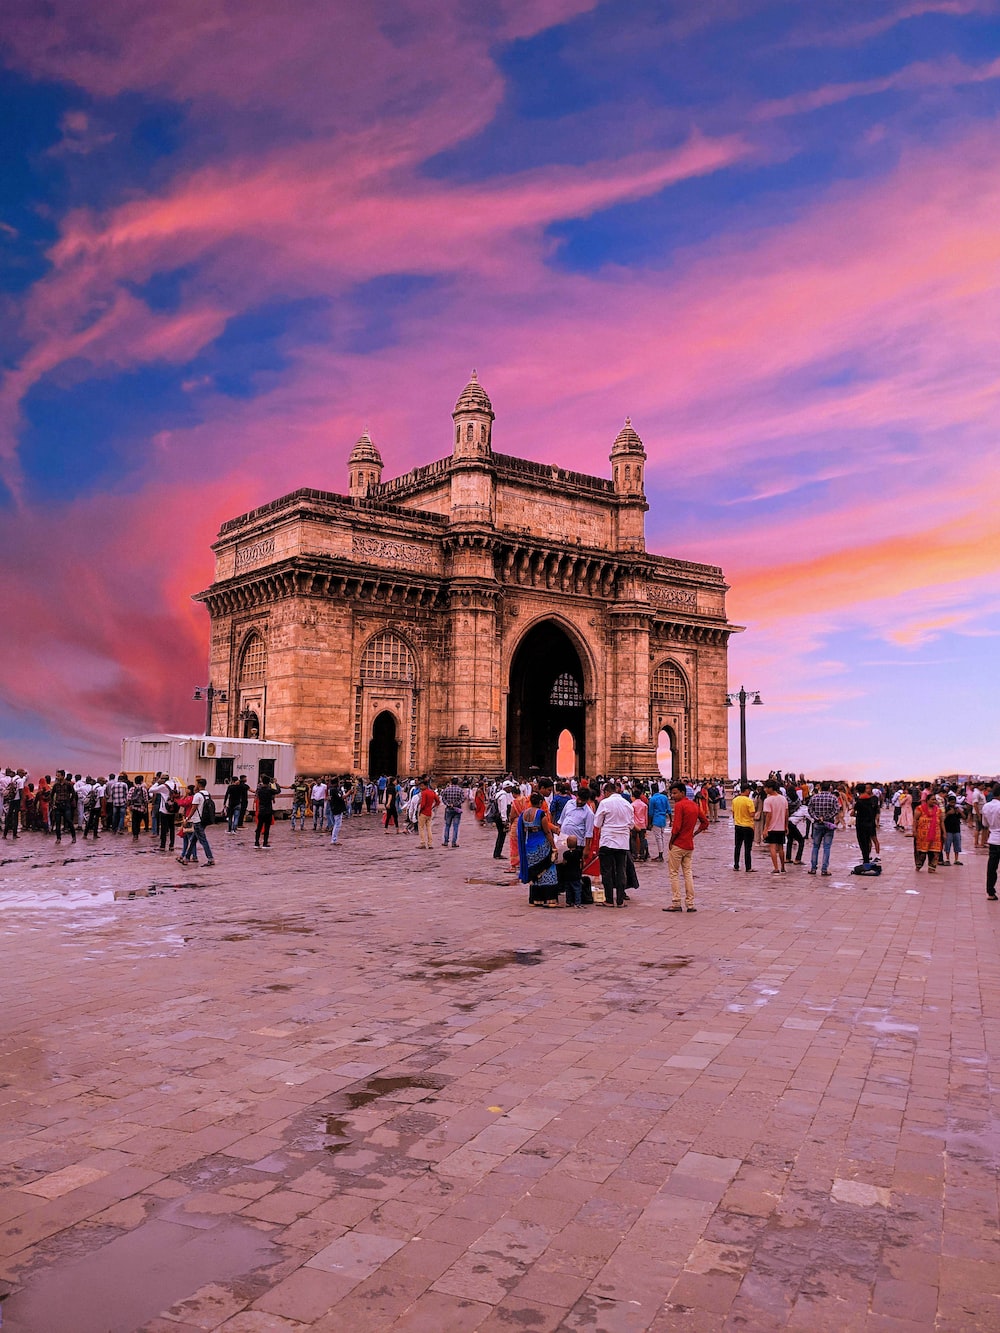 Mumbai with goa - The colonial splendor